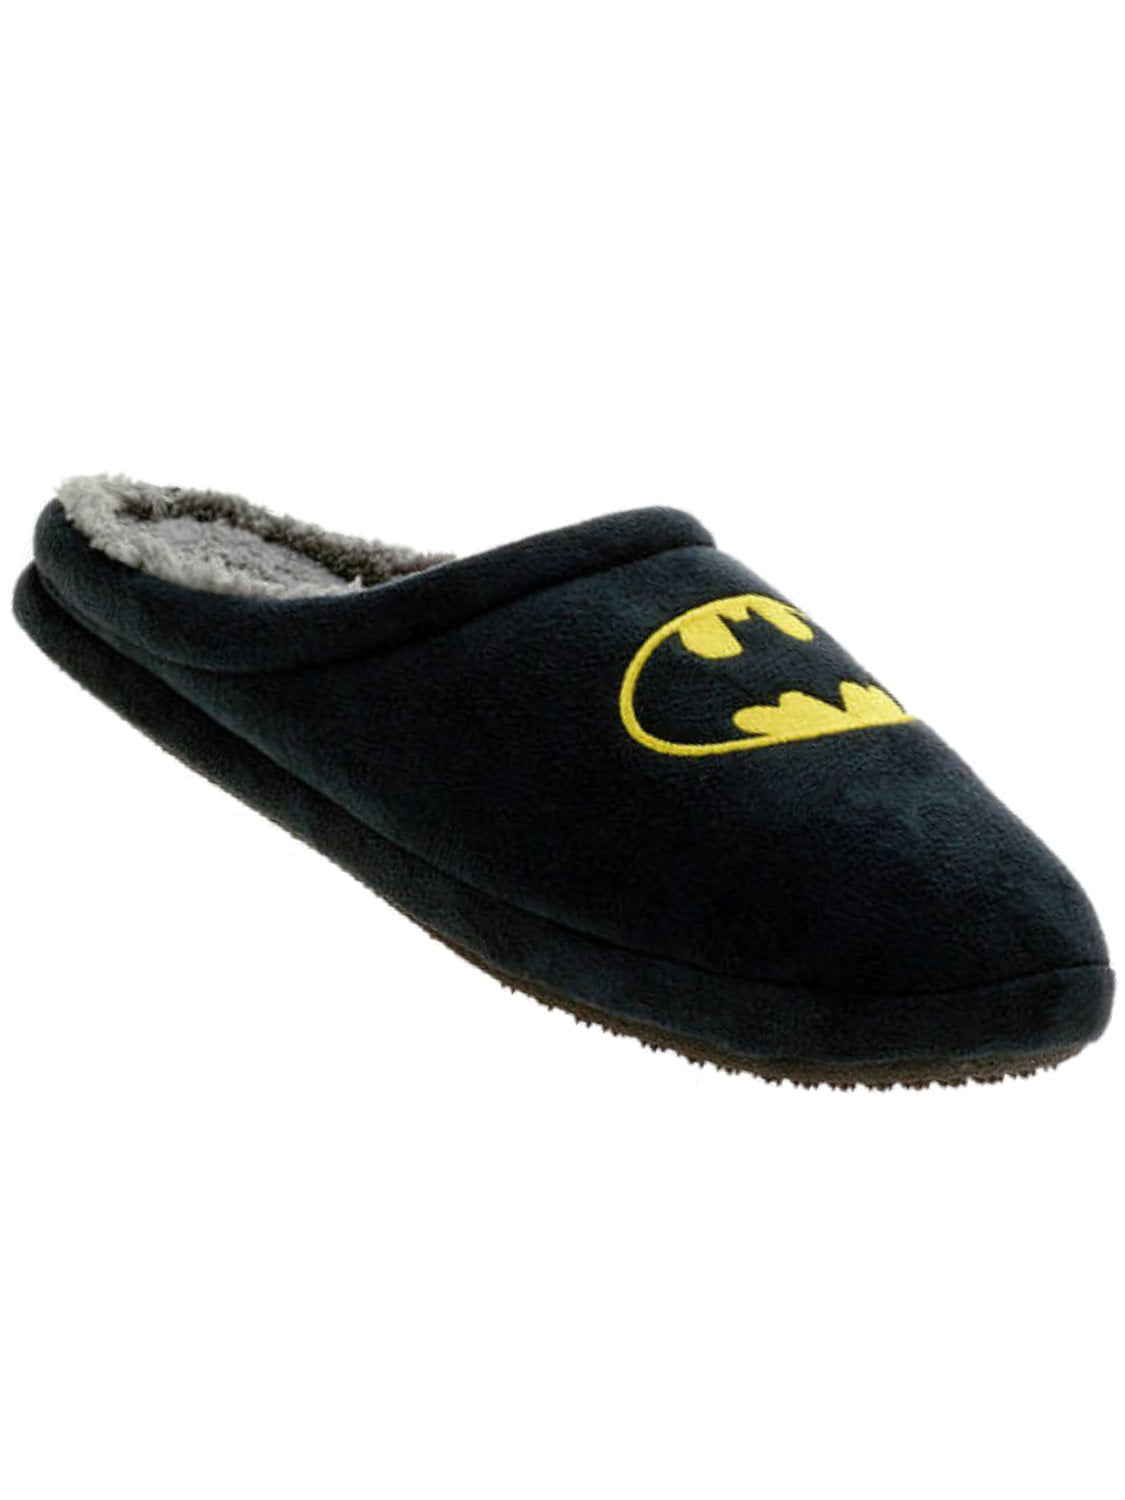 batman house shoes for adults